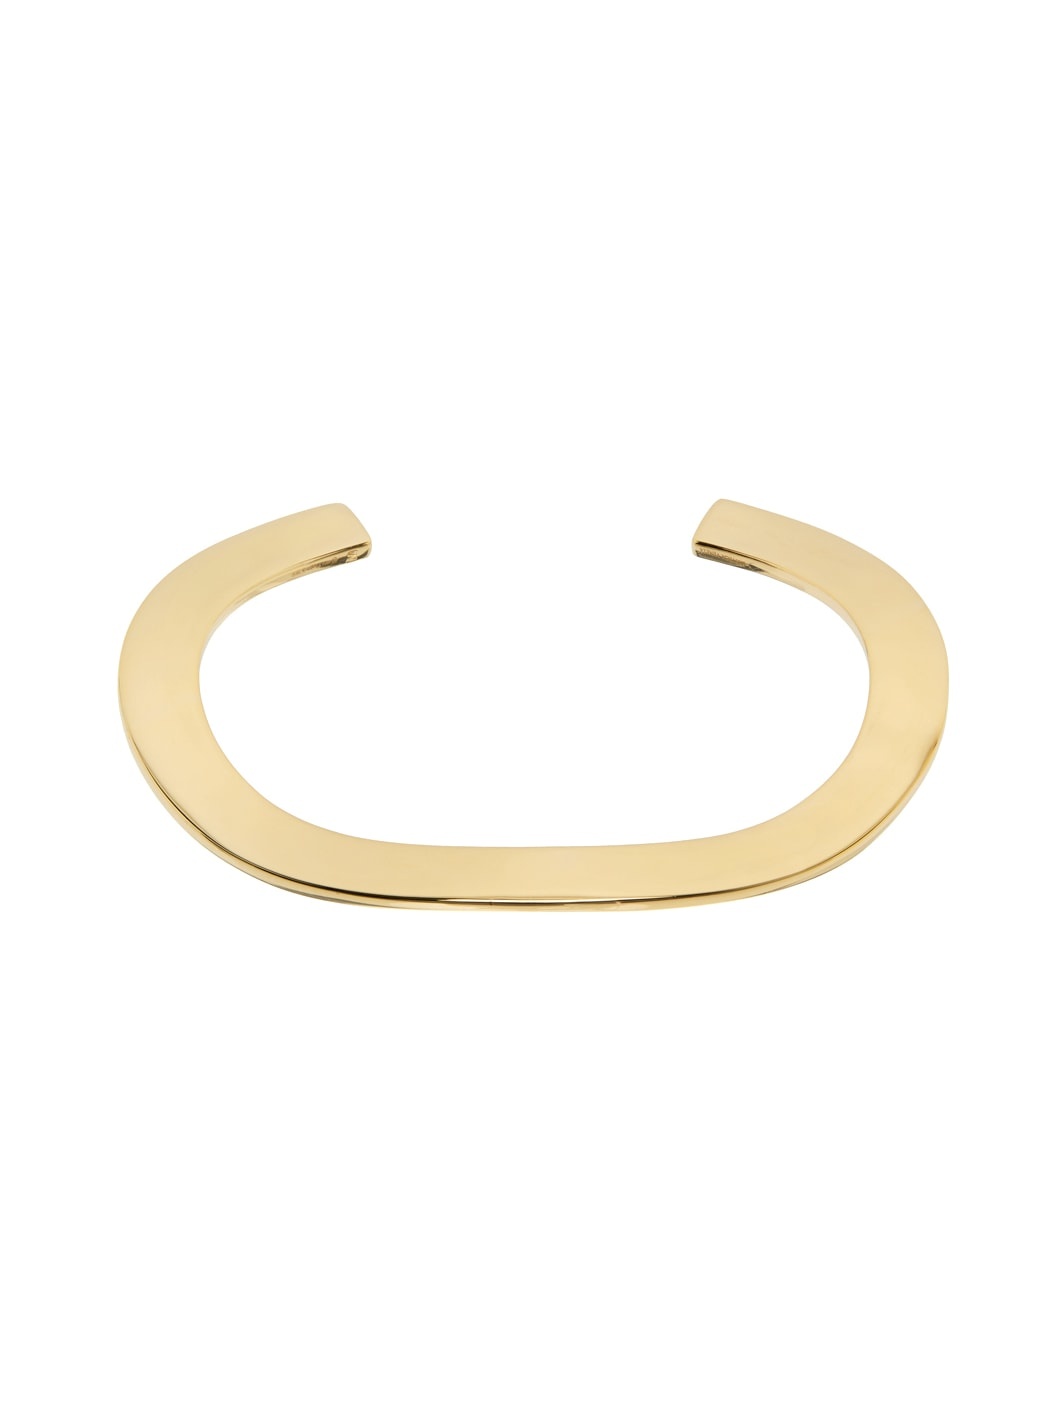 Gold Sculptural Cuff Bracelet - 1